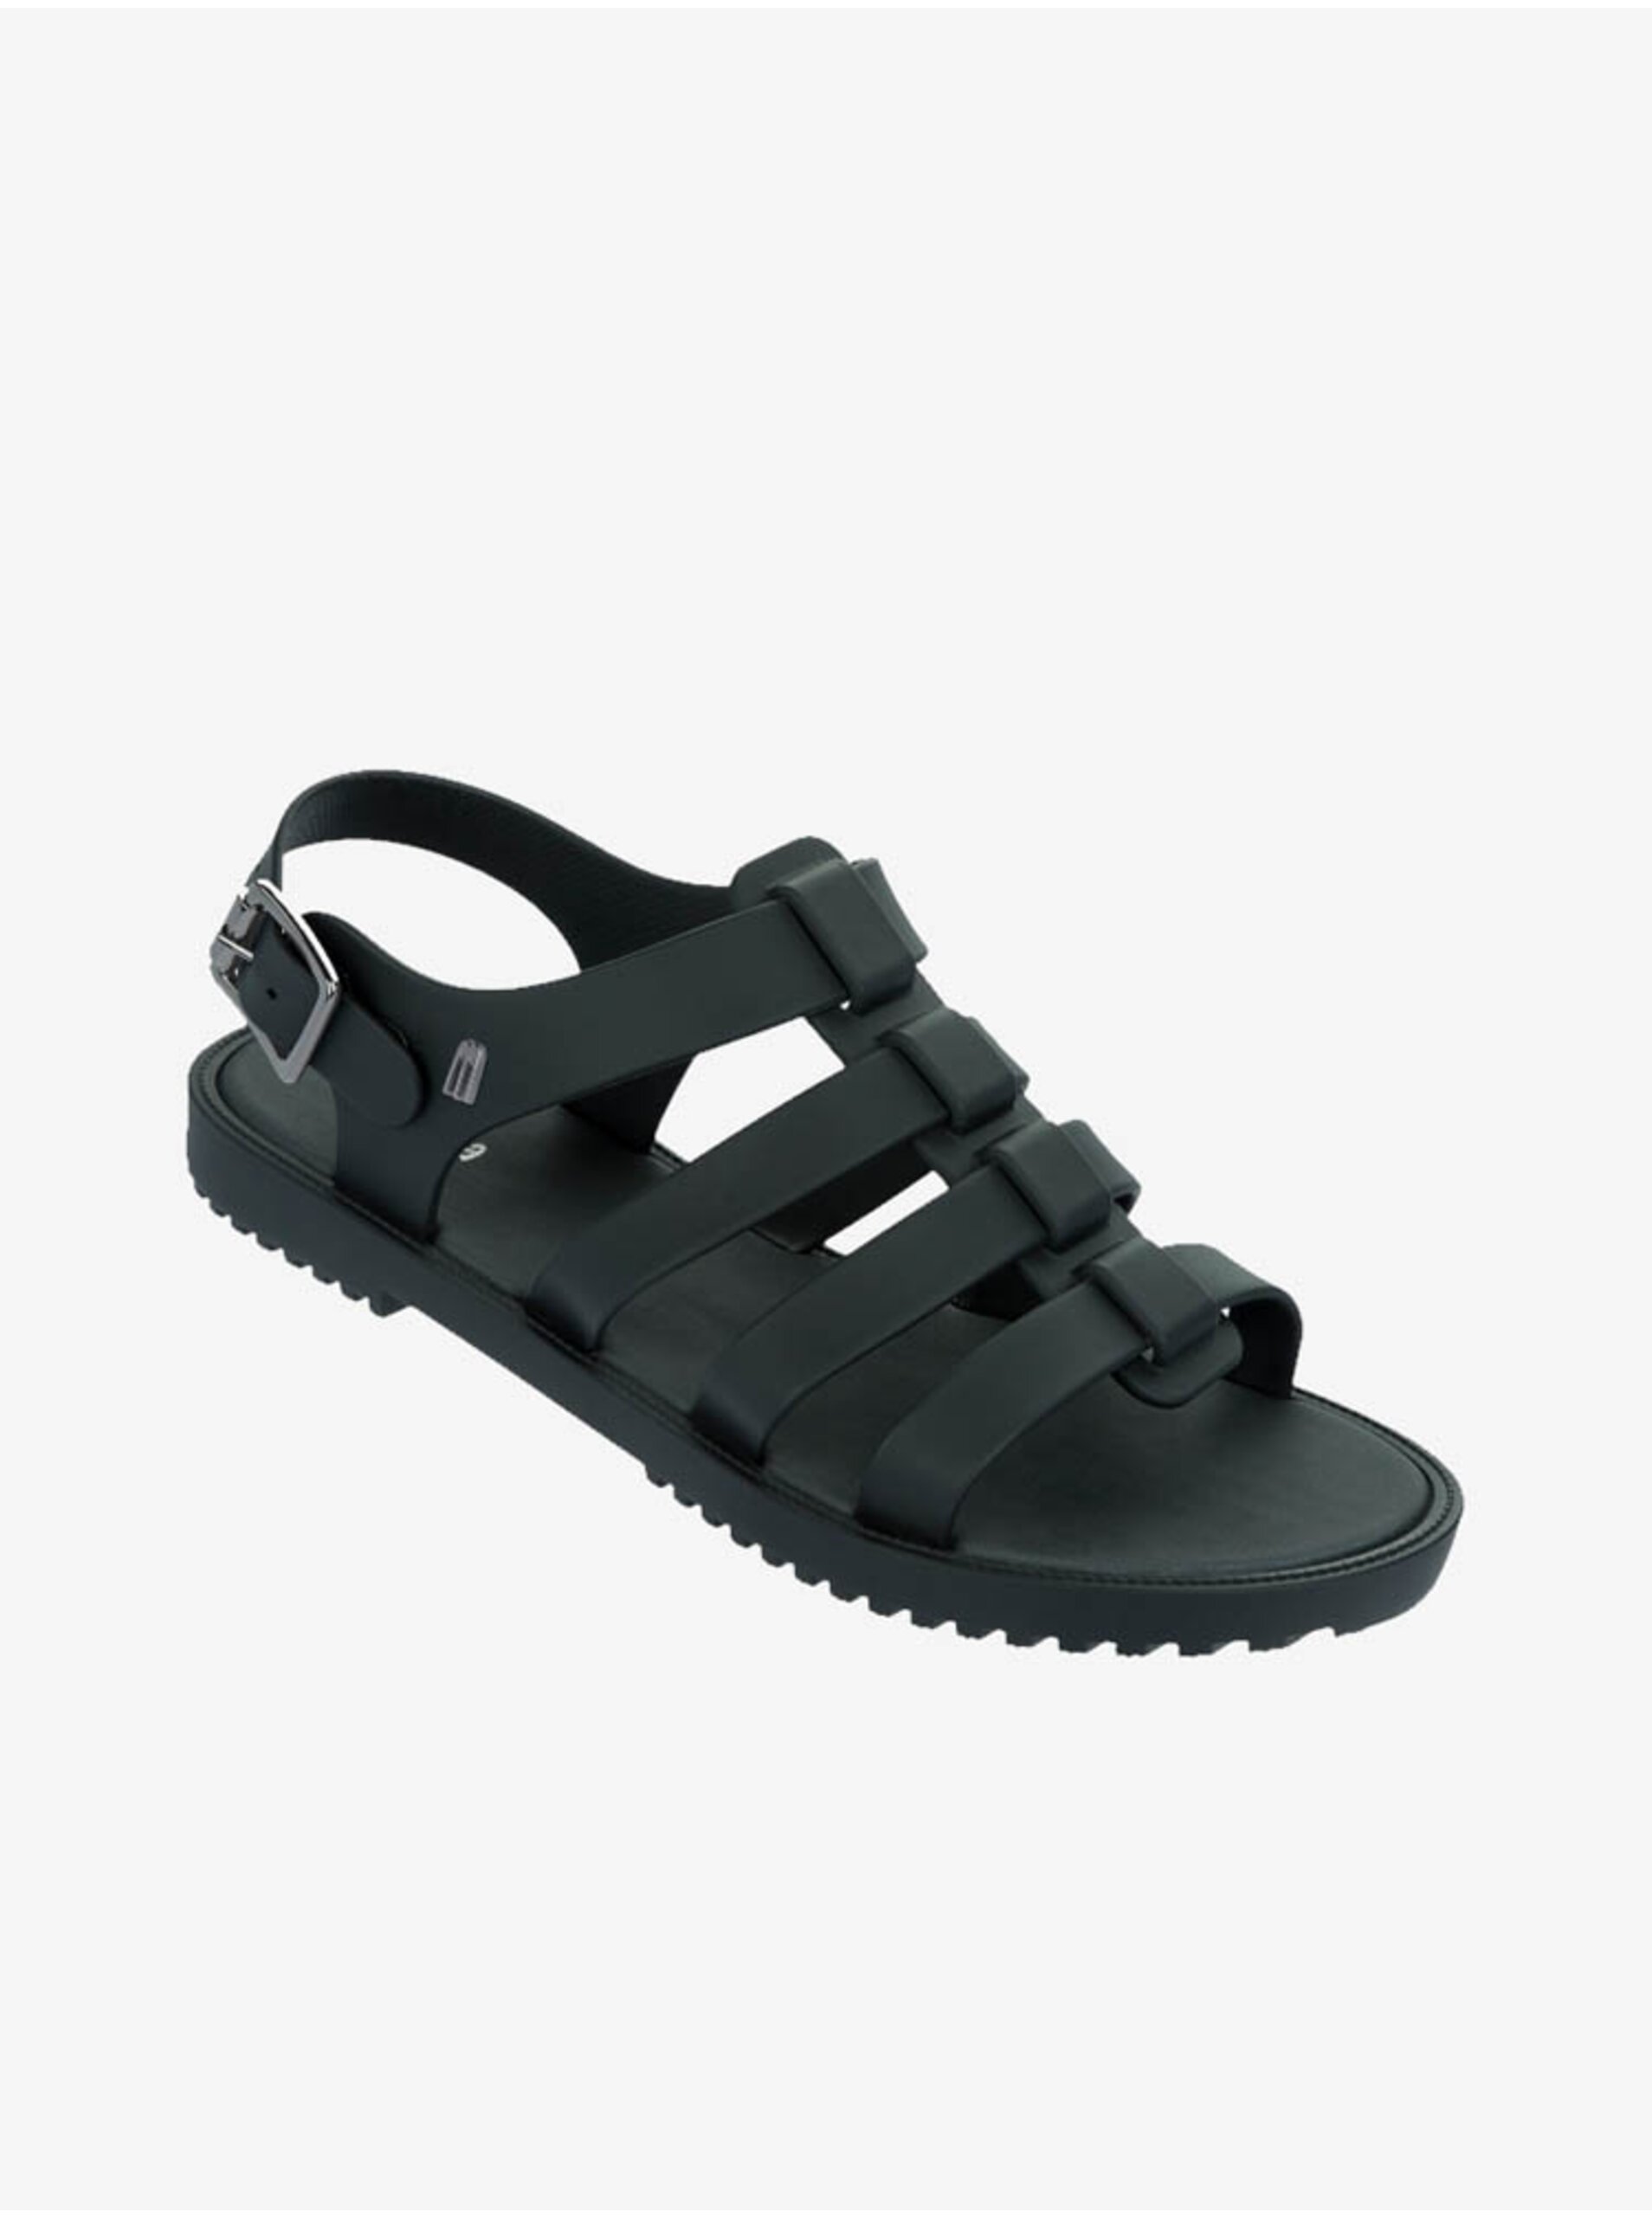 E-shop Čierne dámske sandálky Melissa Flox